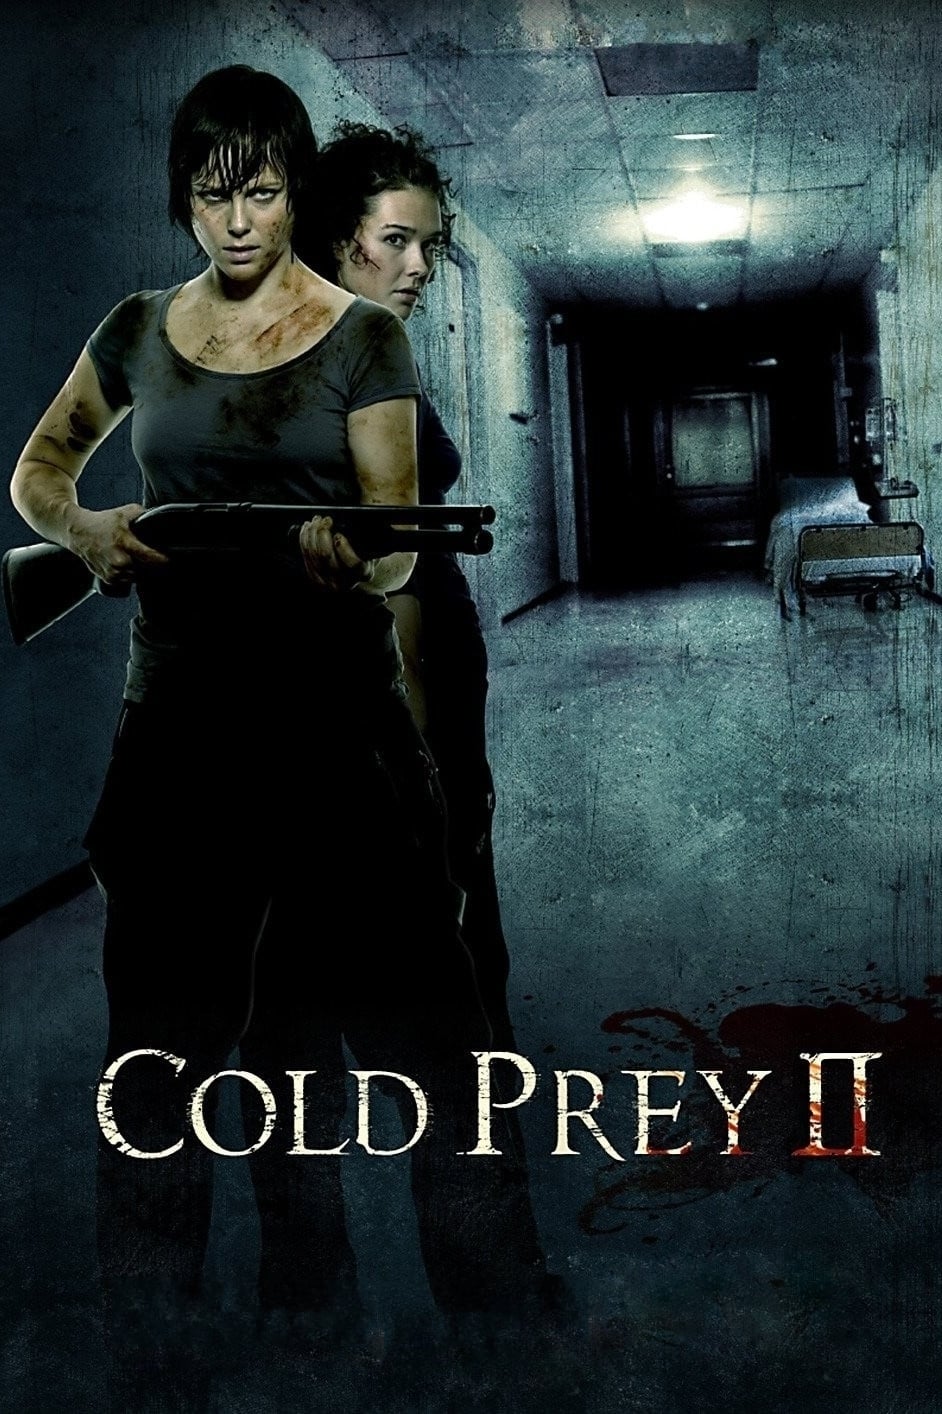 Cold Prey 2 Resurrection - Kälter als der Tod